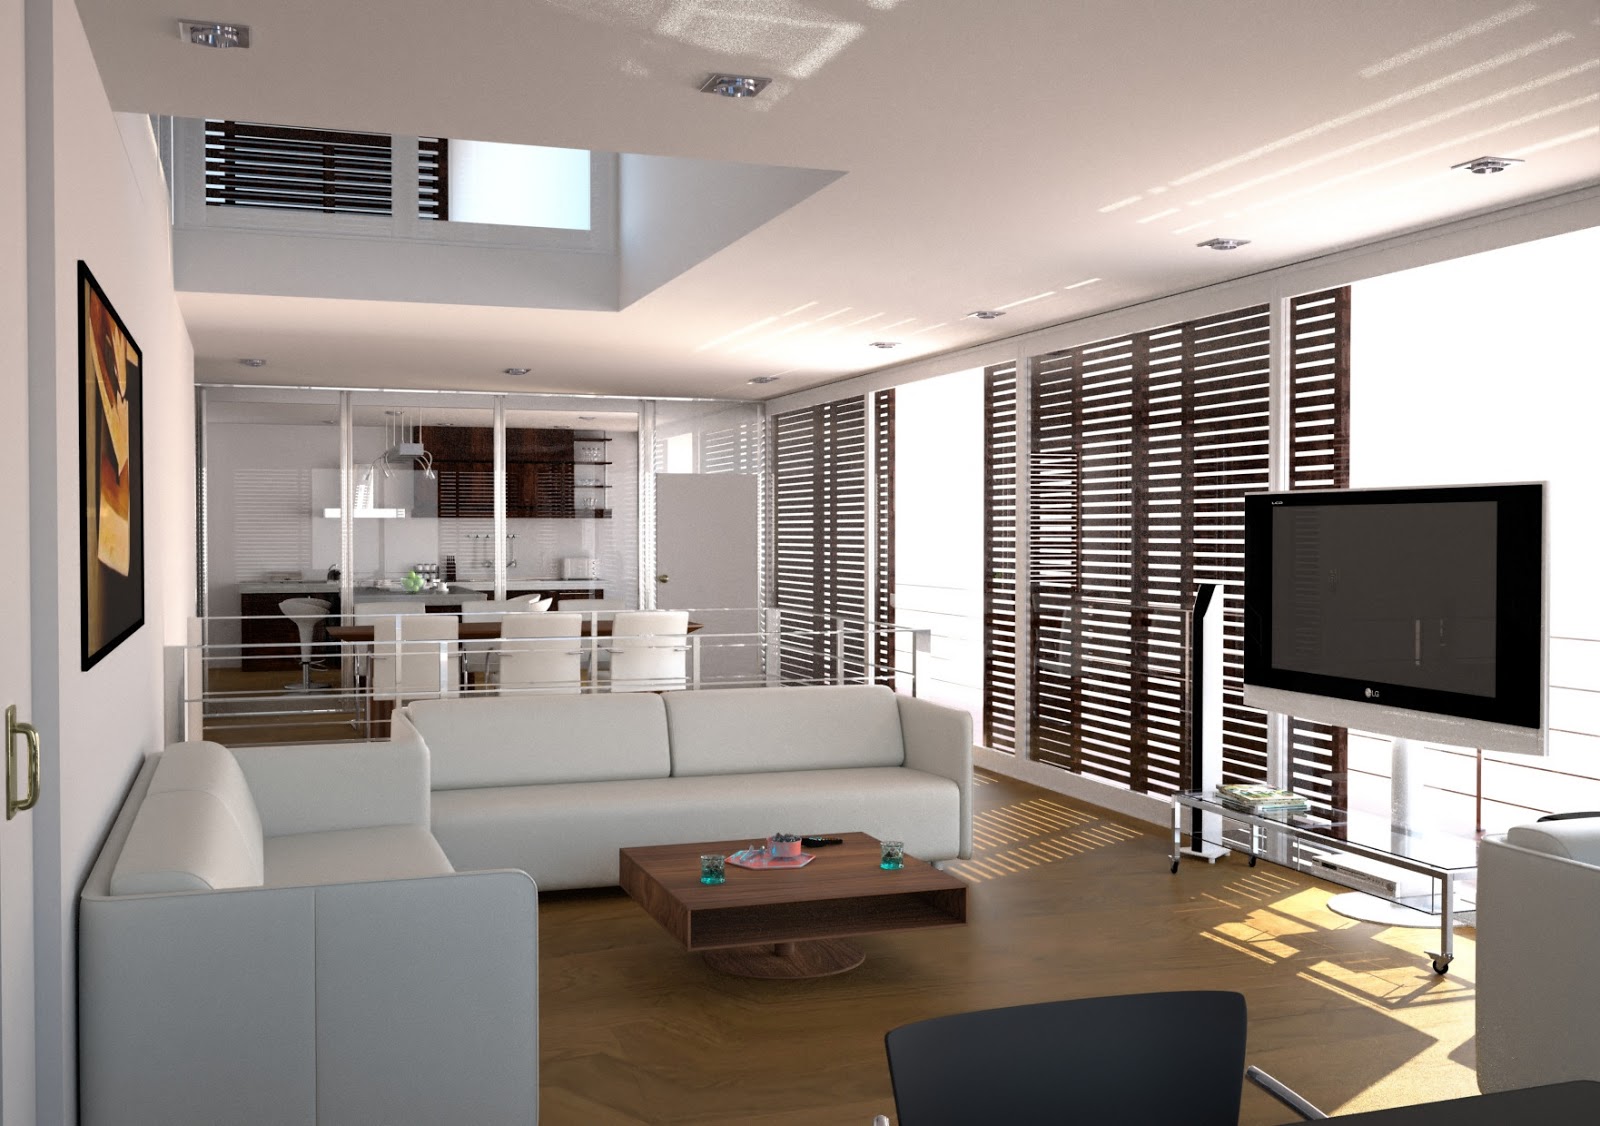 Home Interior Decorations - Home Design Architecture